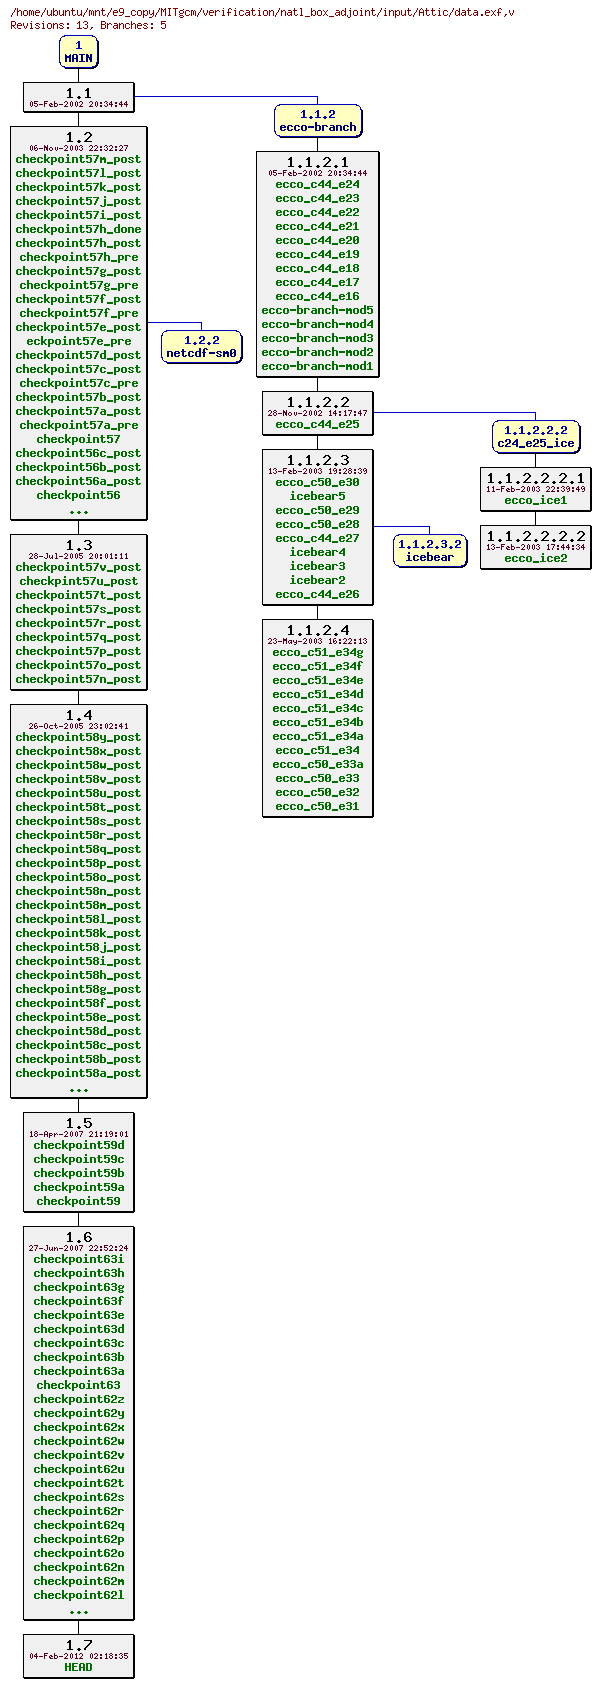 Revisions of MITgcm/verification/natl_box_adjoint/input/data.exf